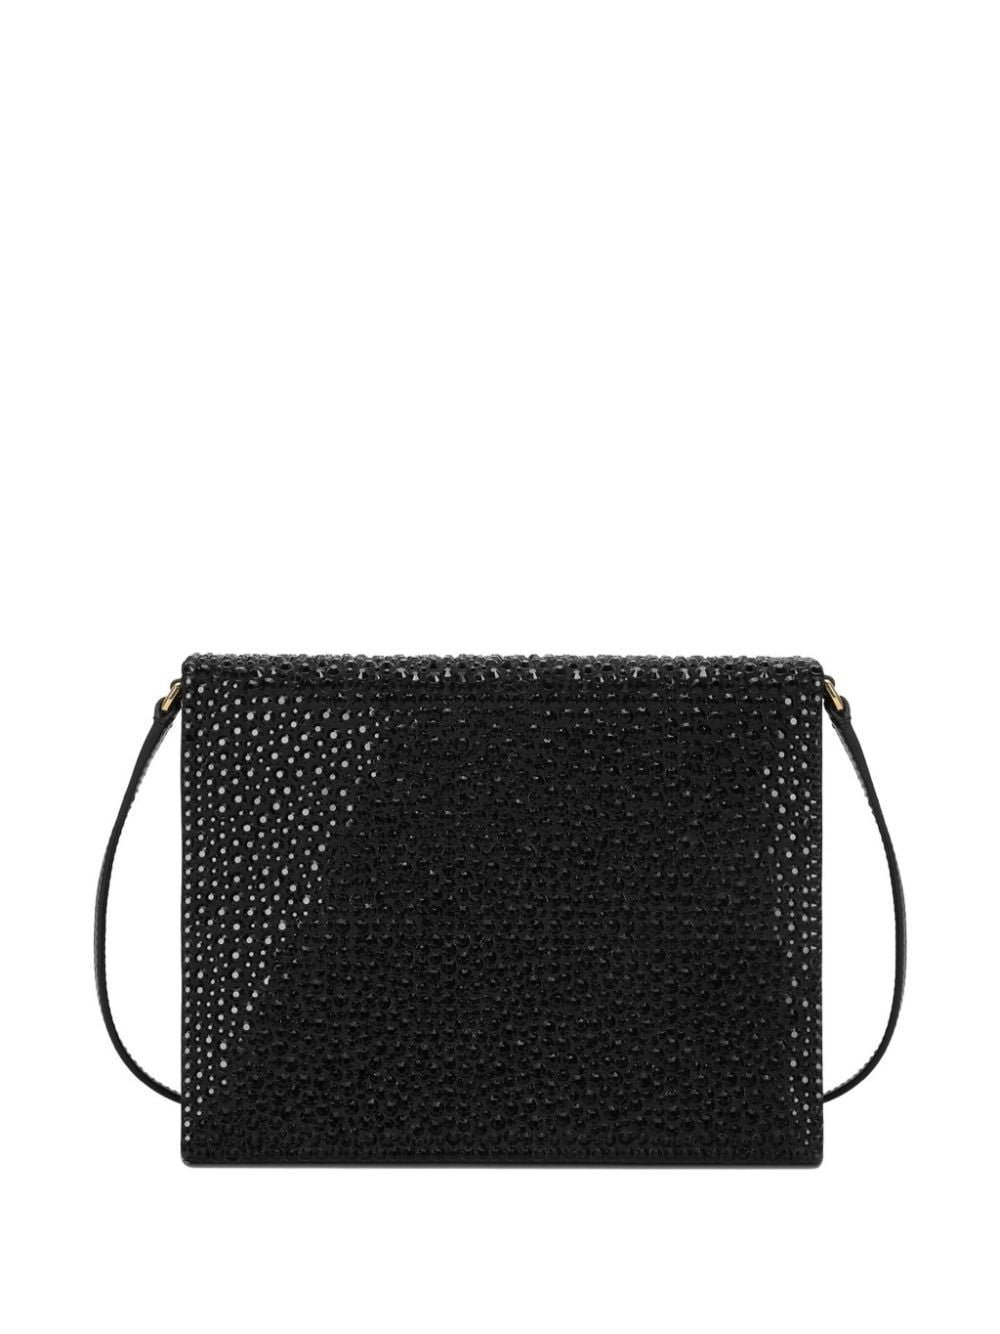 DOLCE & GABBANA Black Crystal-Encrusted Handbag with Embossed DG Logo